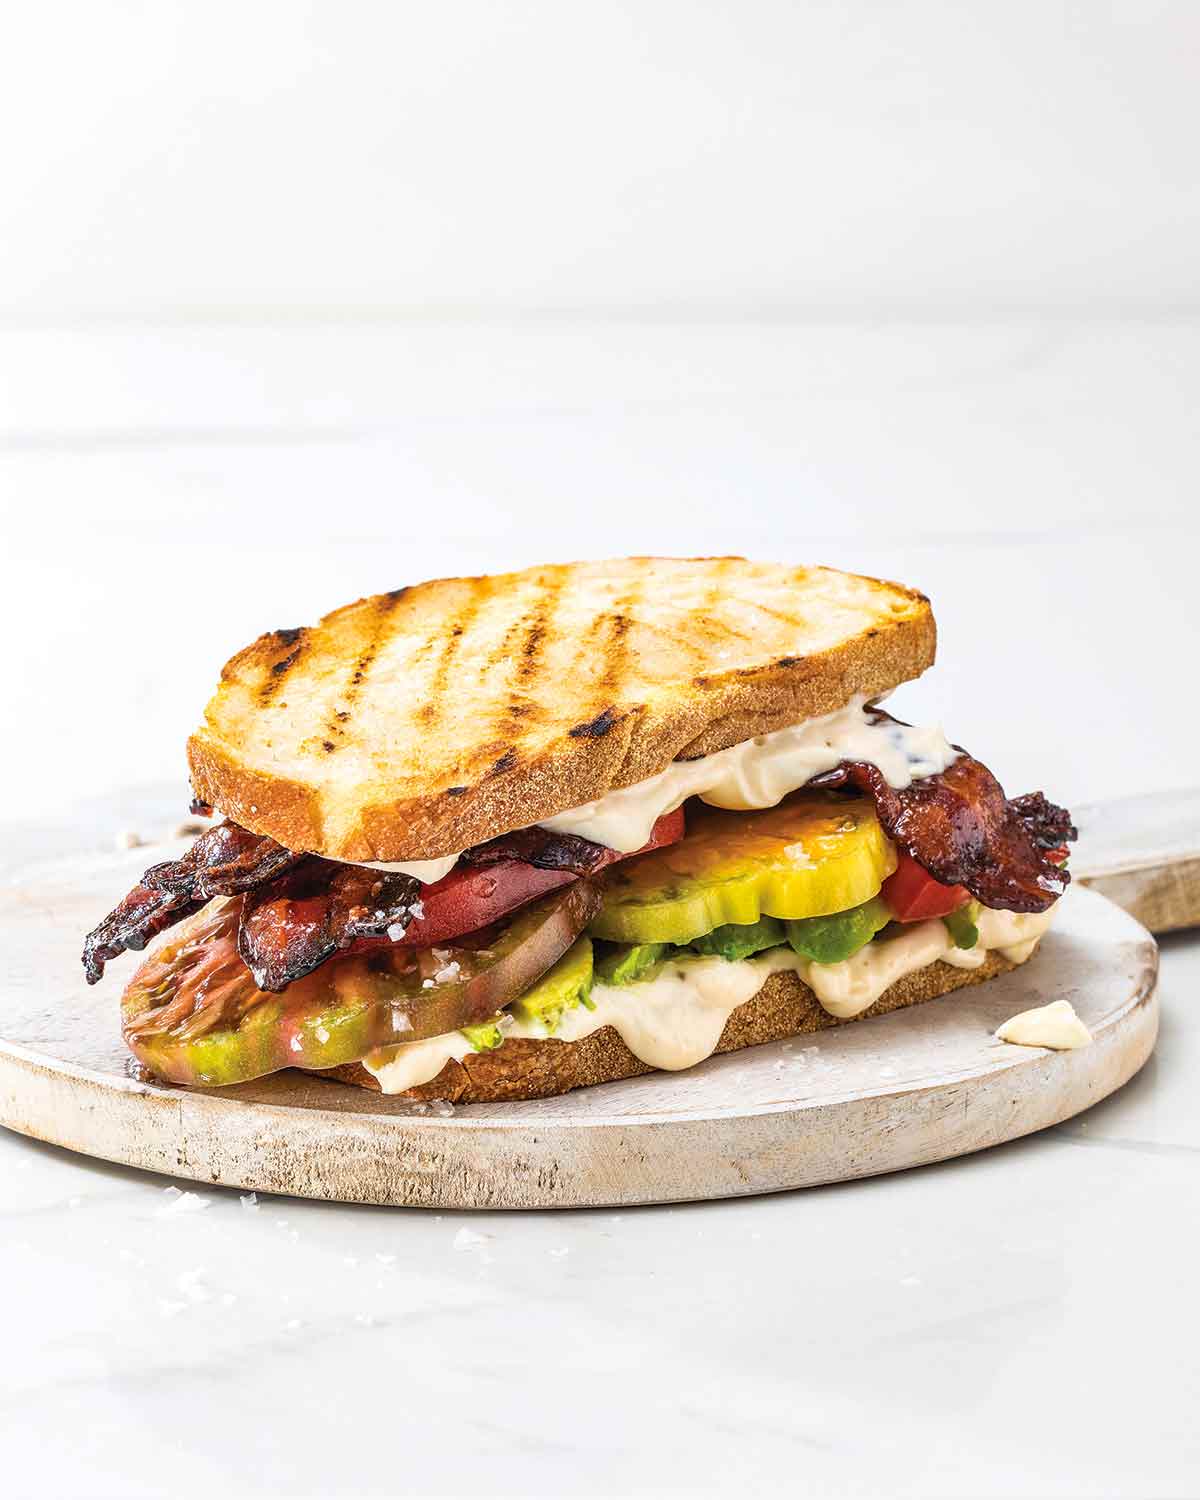 A bacon avocado tomato sandwich on a round wooden board.